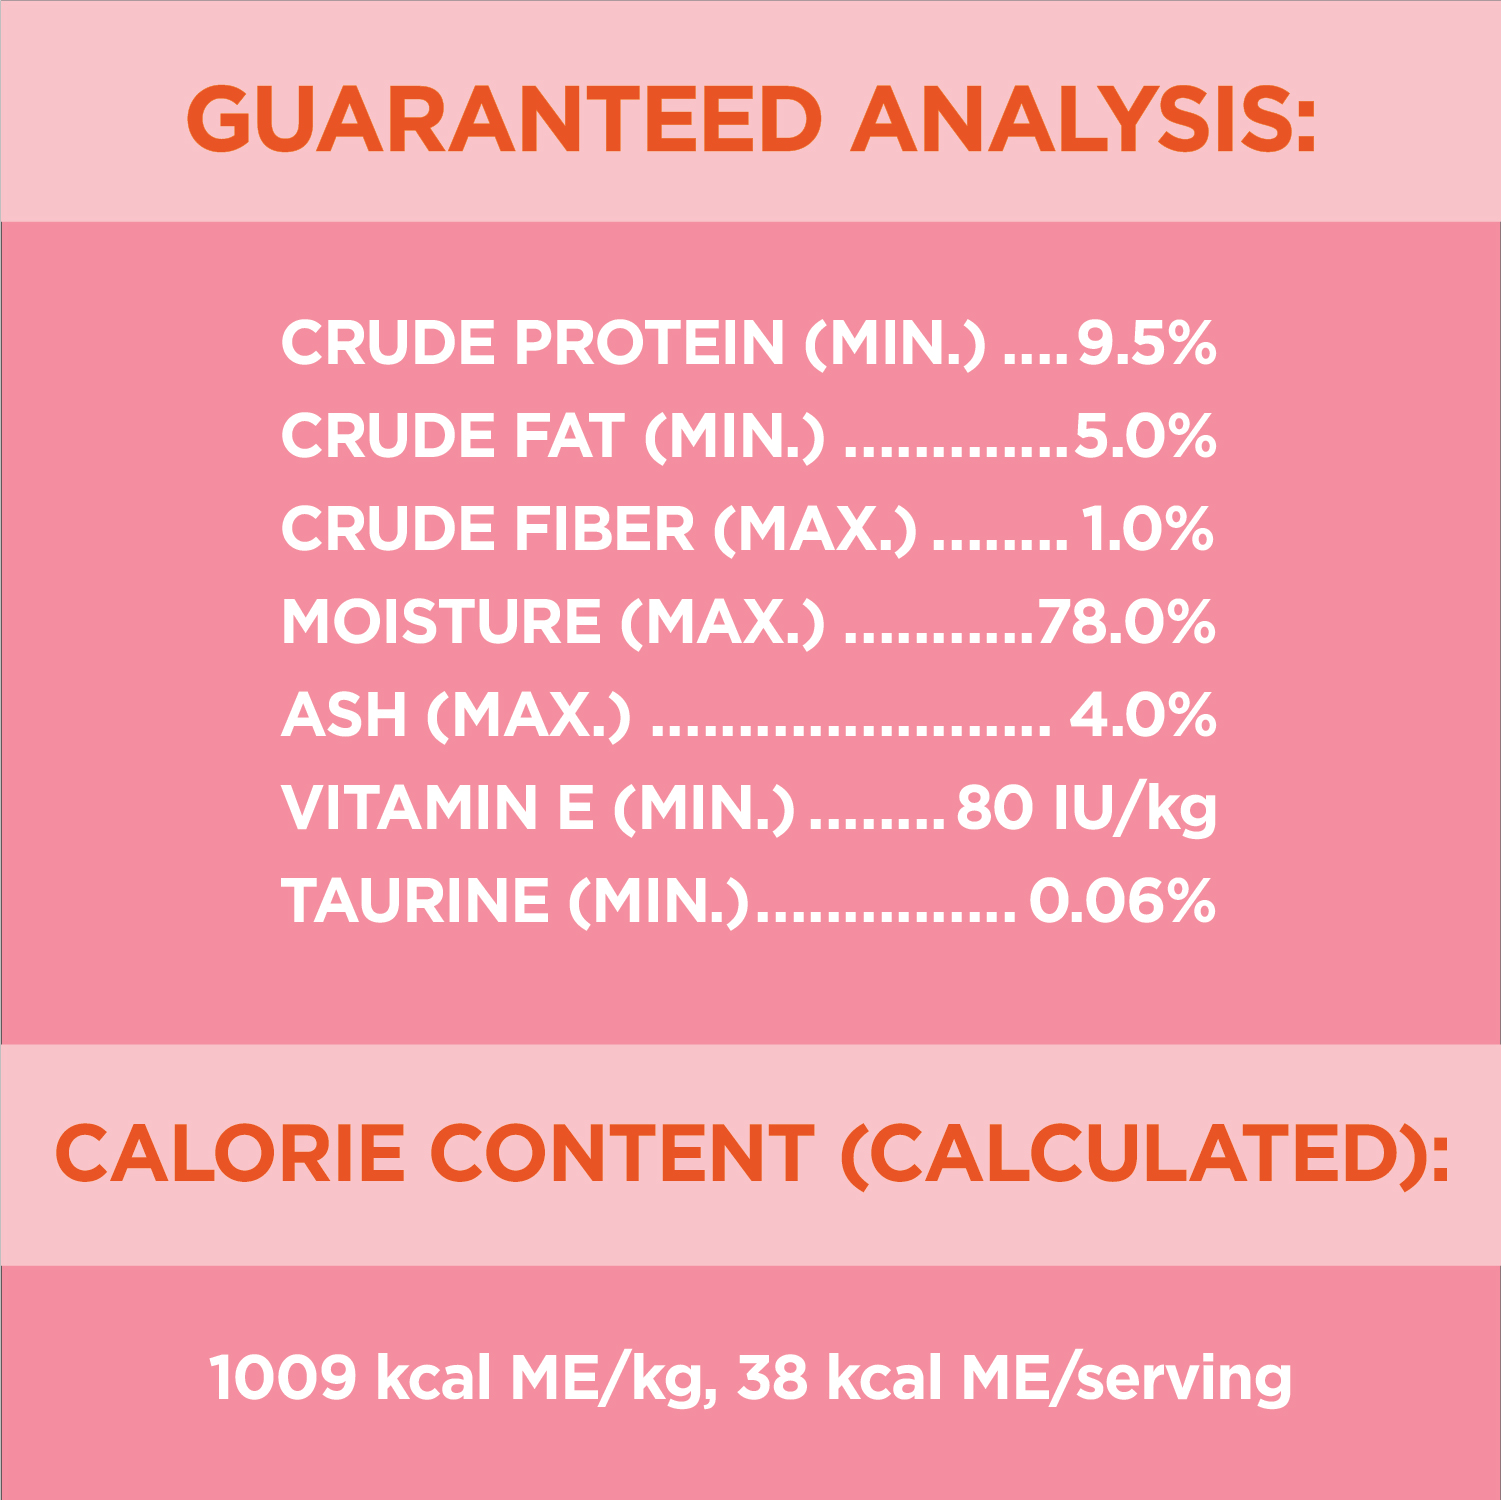 IAMS™ PERFECT PORTIONS™ Indoor Wet Cat Food Salmon Paté guaranteed analysis image